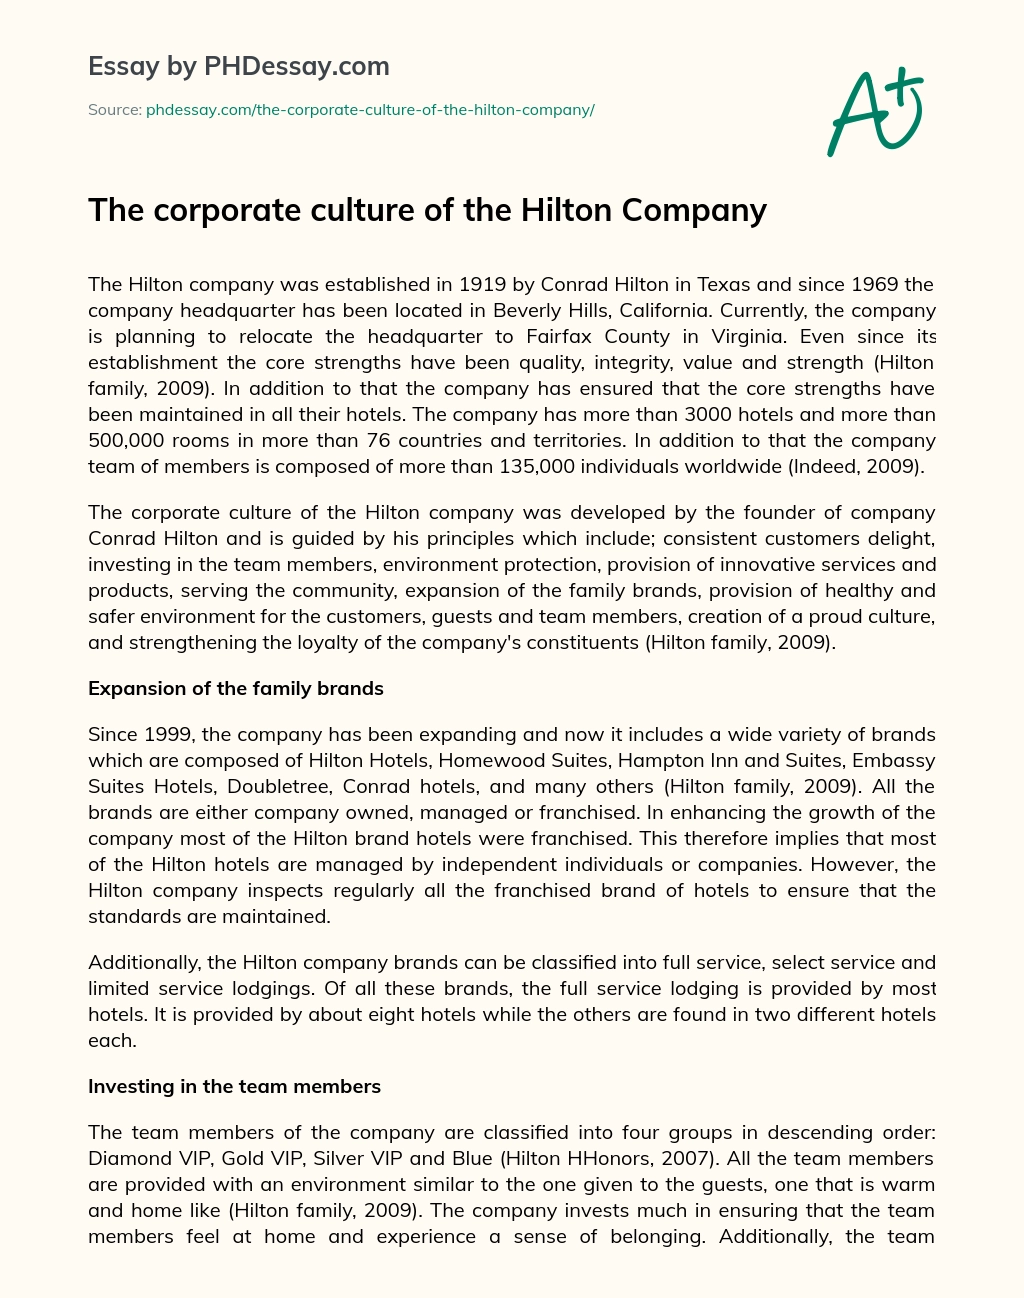 The corporate culture of the Hilton Company essay